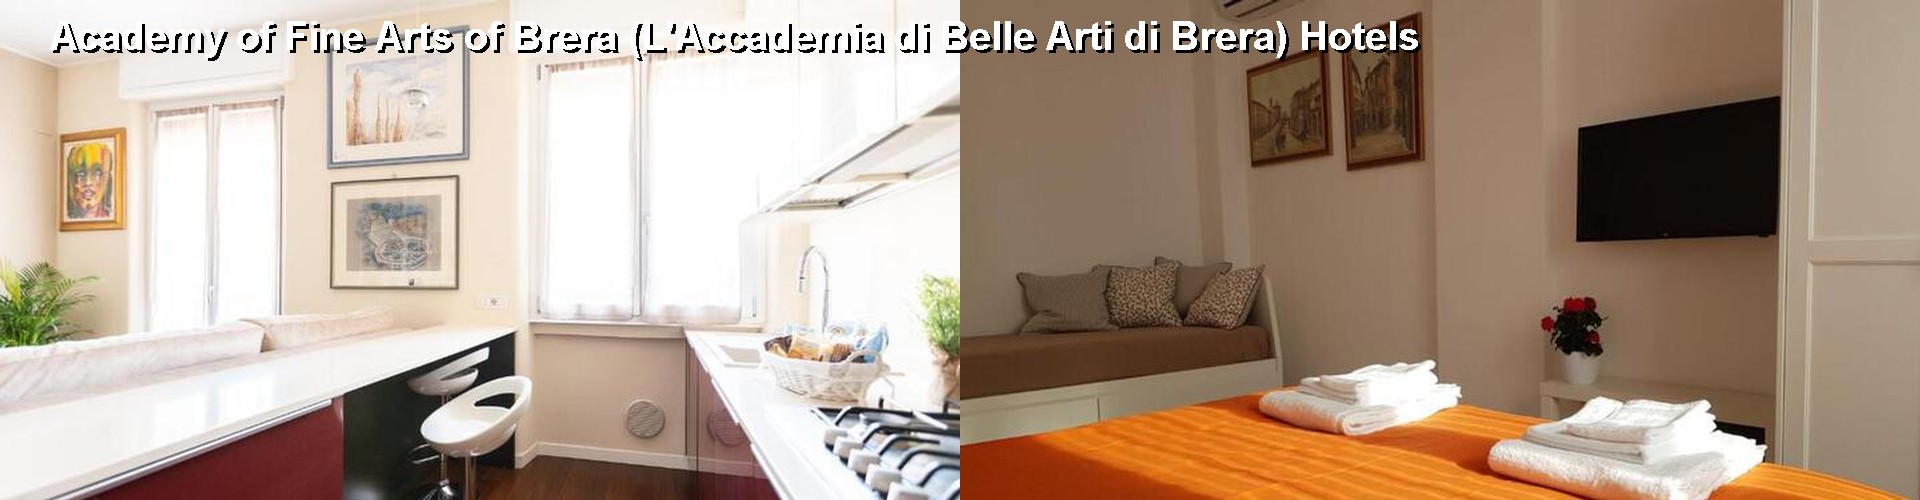 5 Best Hotels near Academy of Fine Arts of Brera (L'Accademia di Belle Arti di Brera)